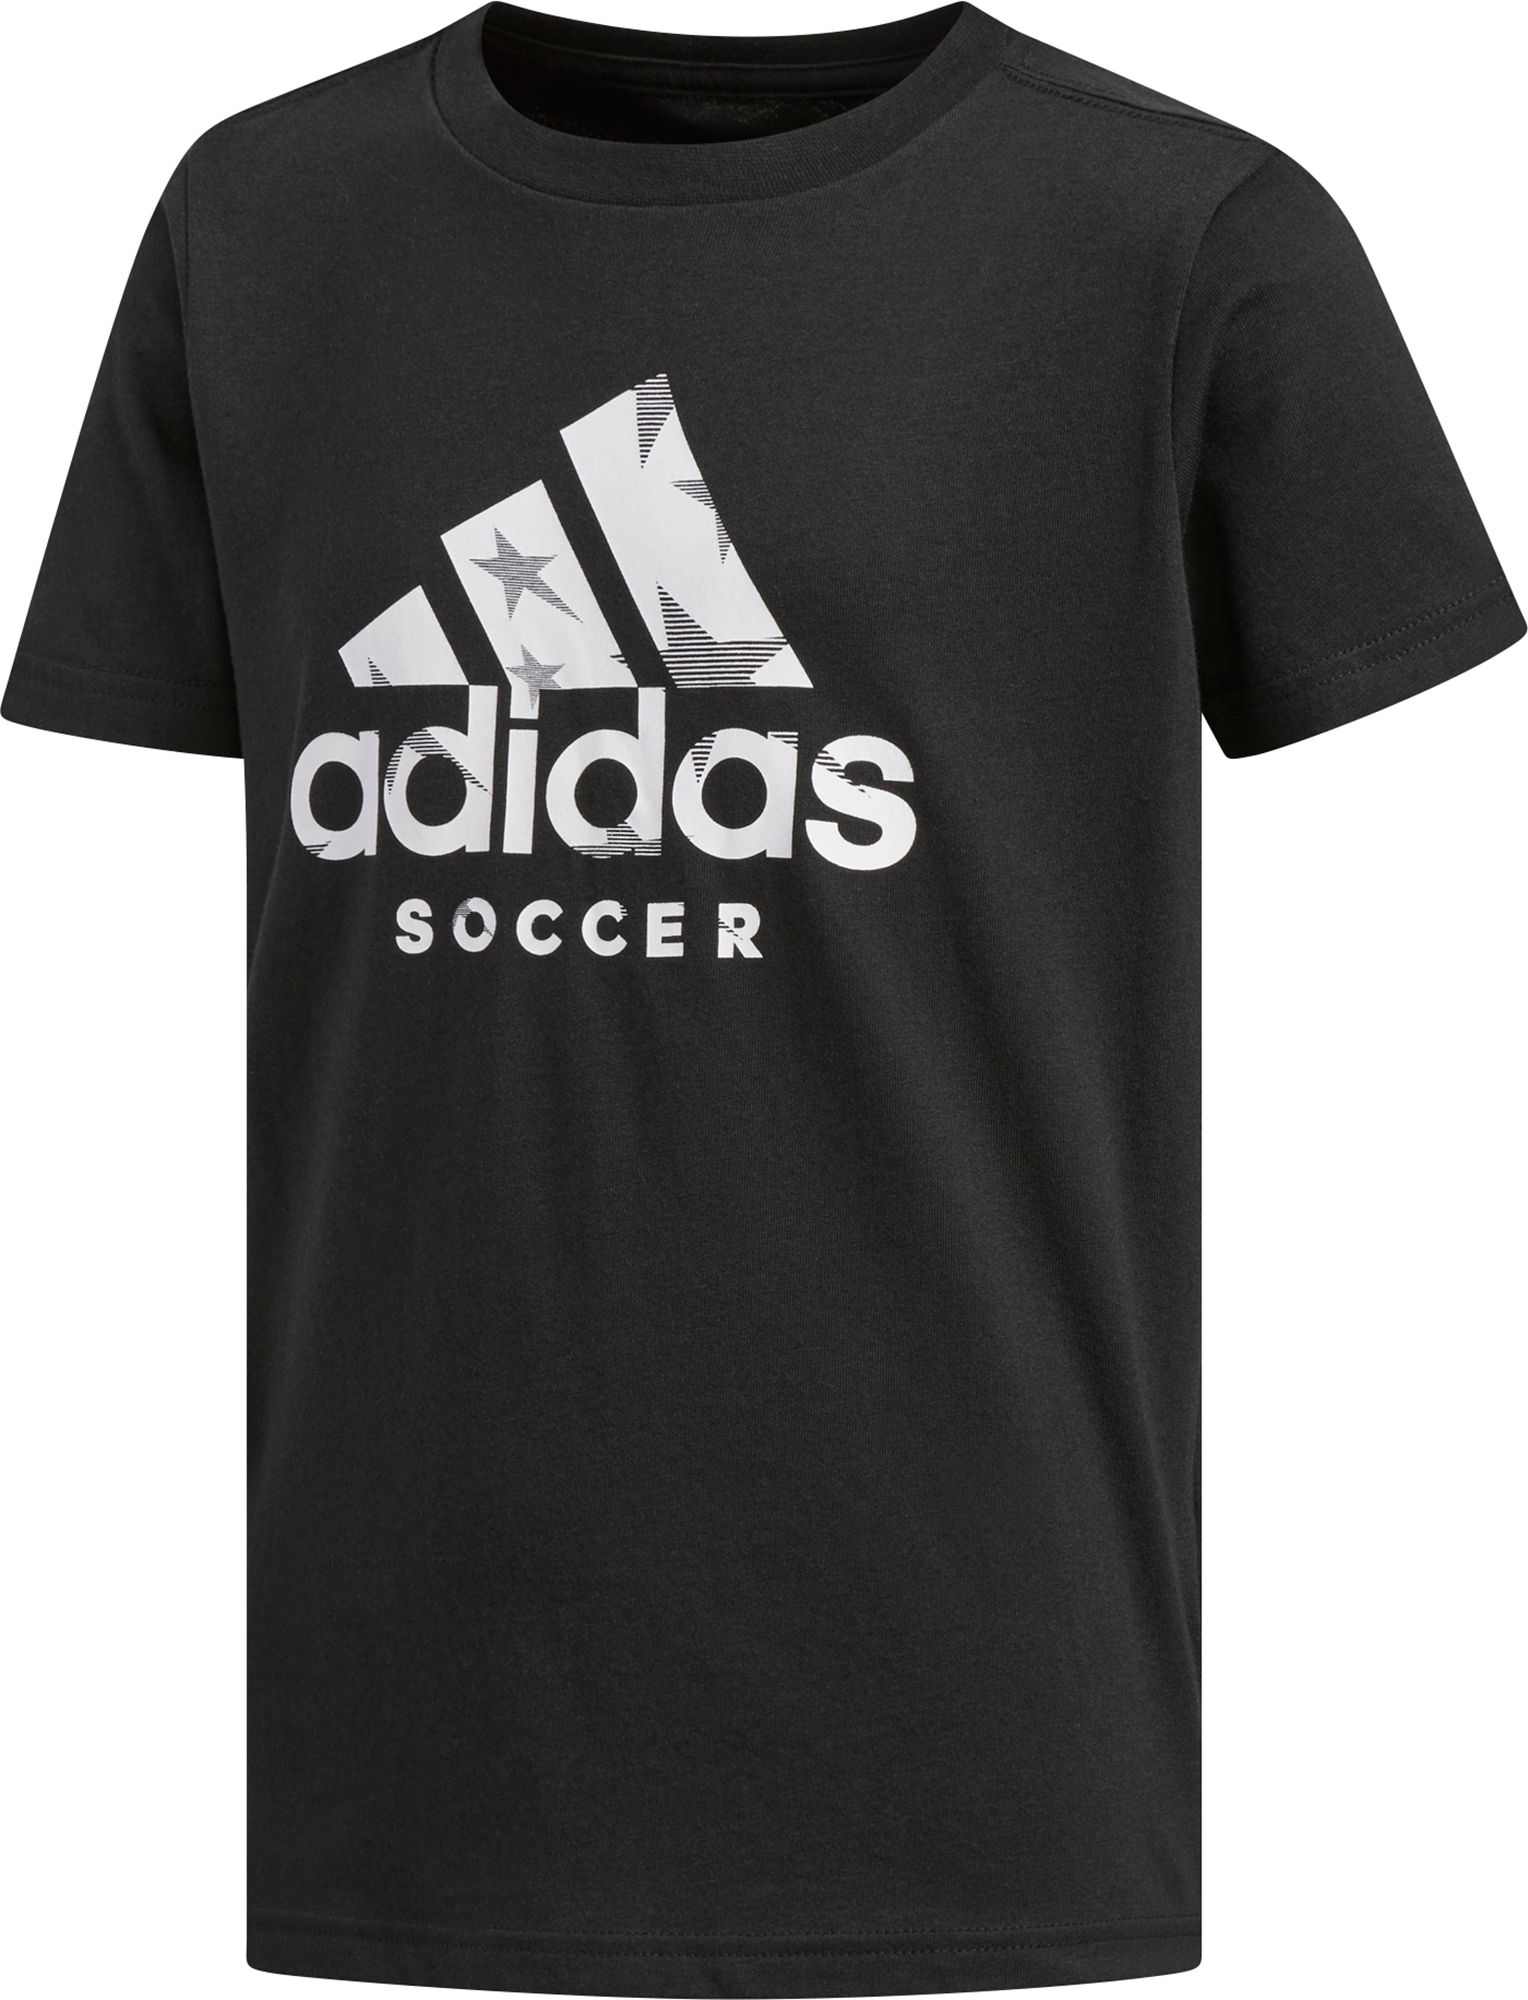 adidas soccer t shirts